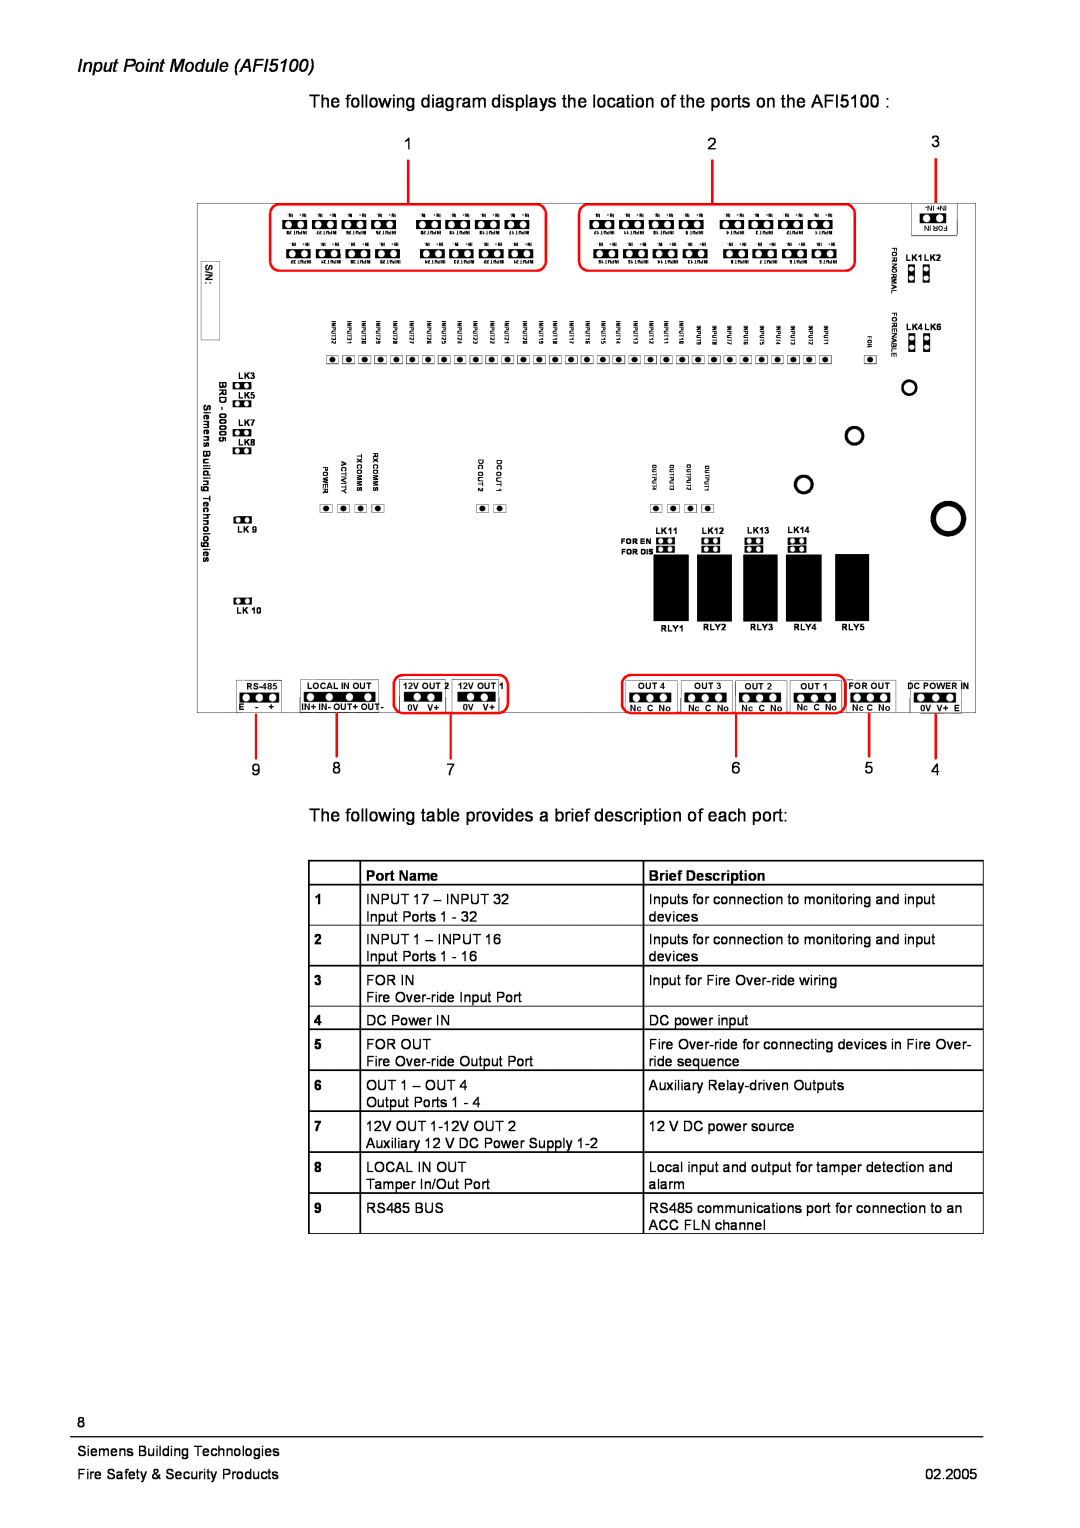 Siemens Input Point Module AFI5100, The following table provides a brief description of each port, Port Name 